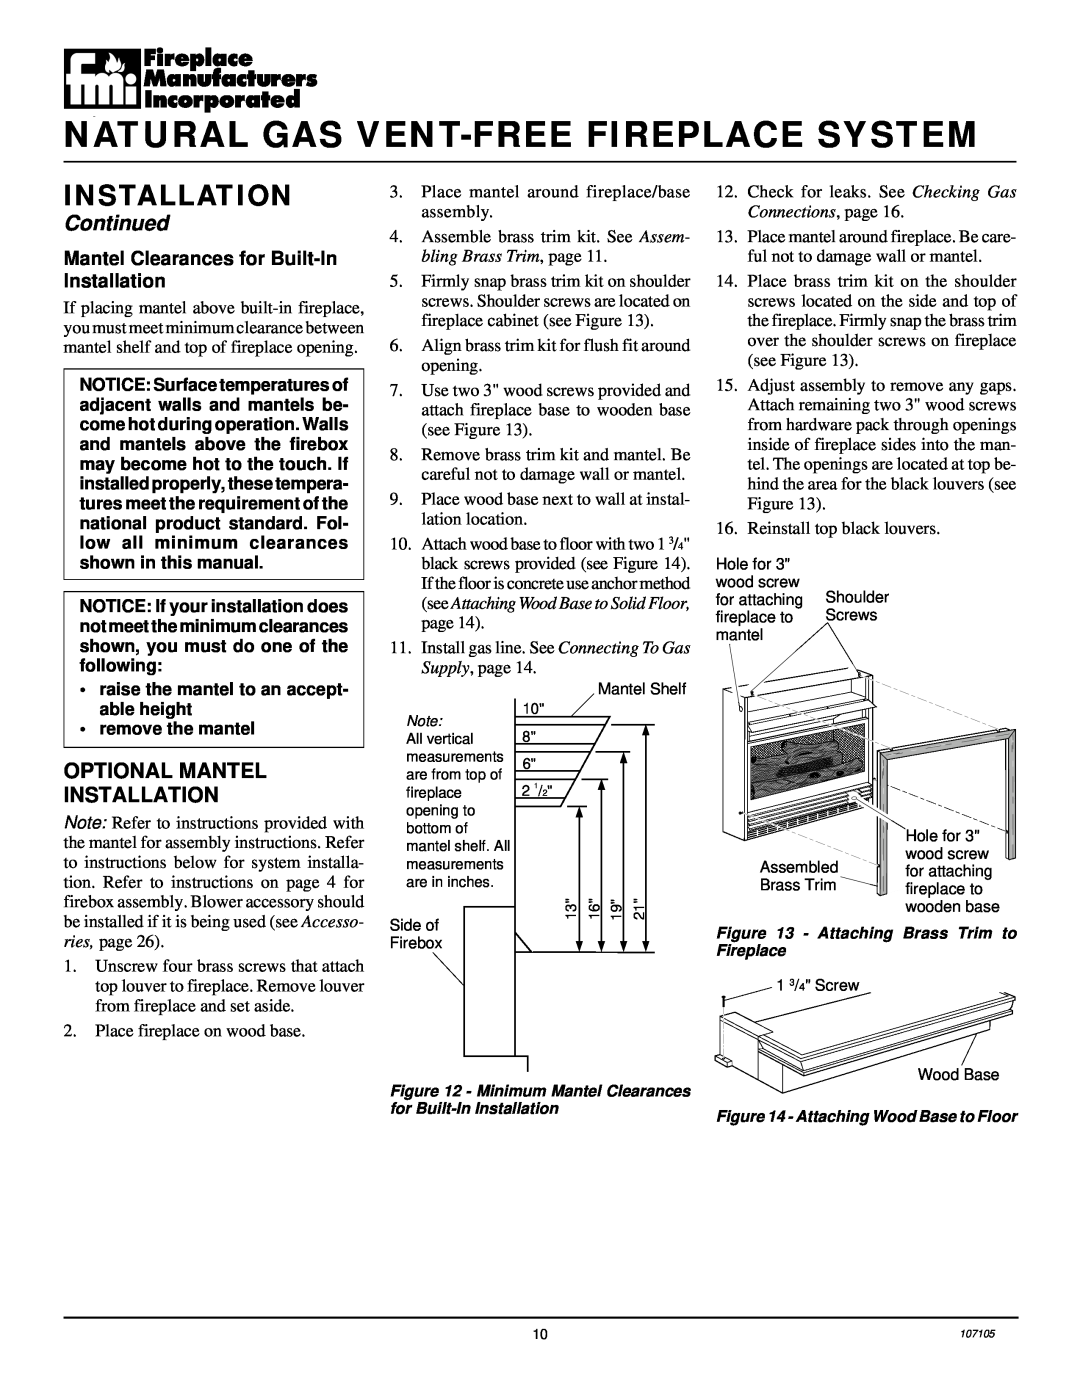 Desa FMH26TN 14 installation manual Optional Mantel Installation, Mantel Clearances for Built-InInstallation, Continued 